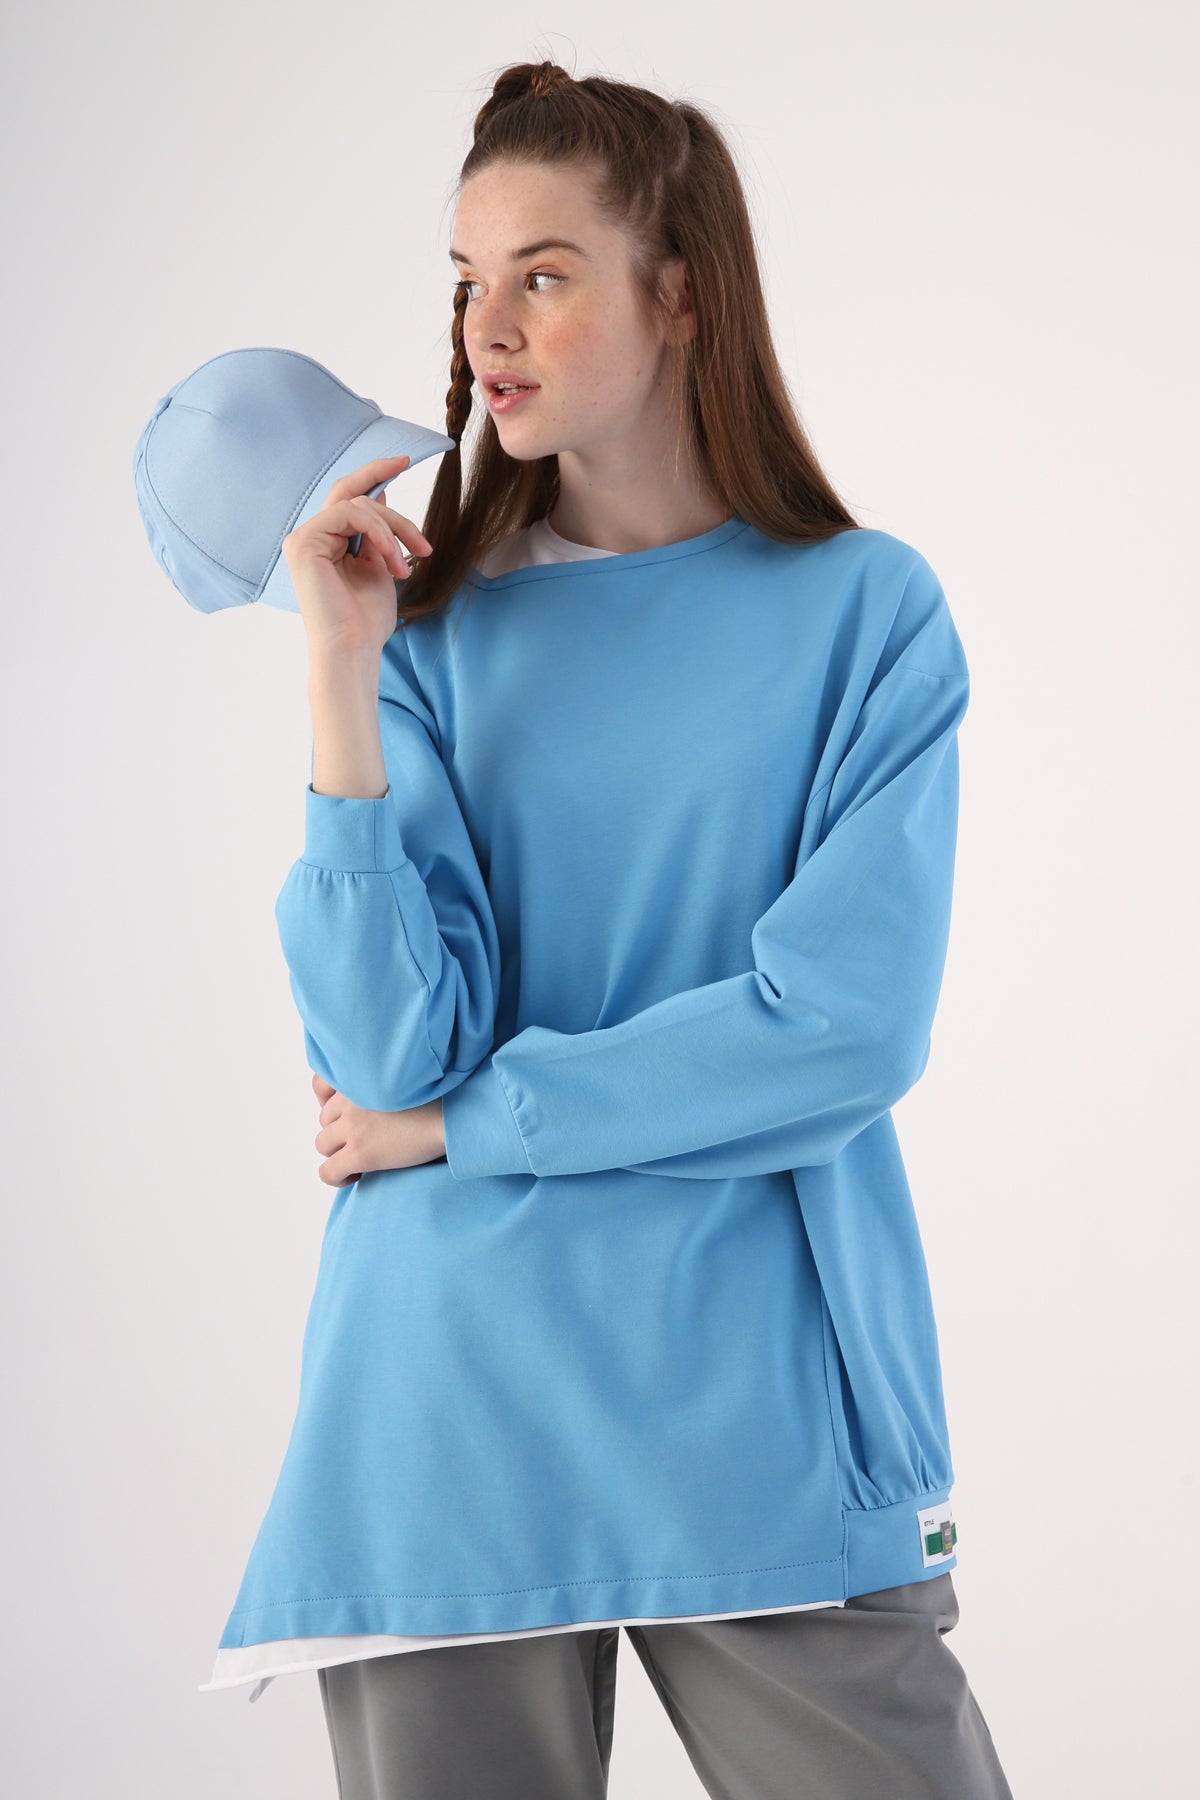 Allday - Pamuklu Garnili İki Renkli Asimetrik Sweatshirt - Mavi